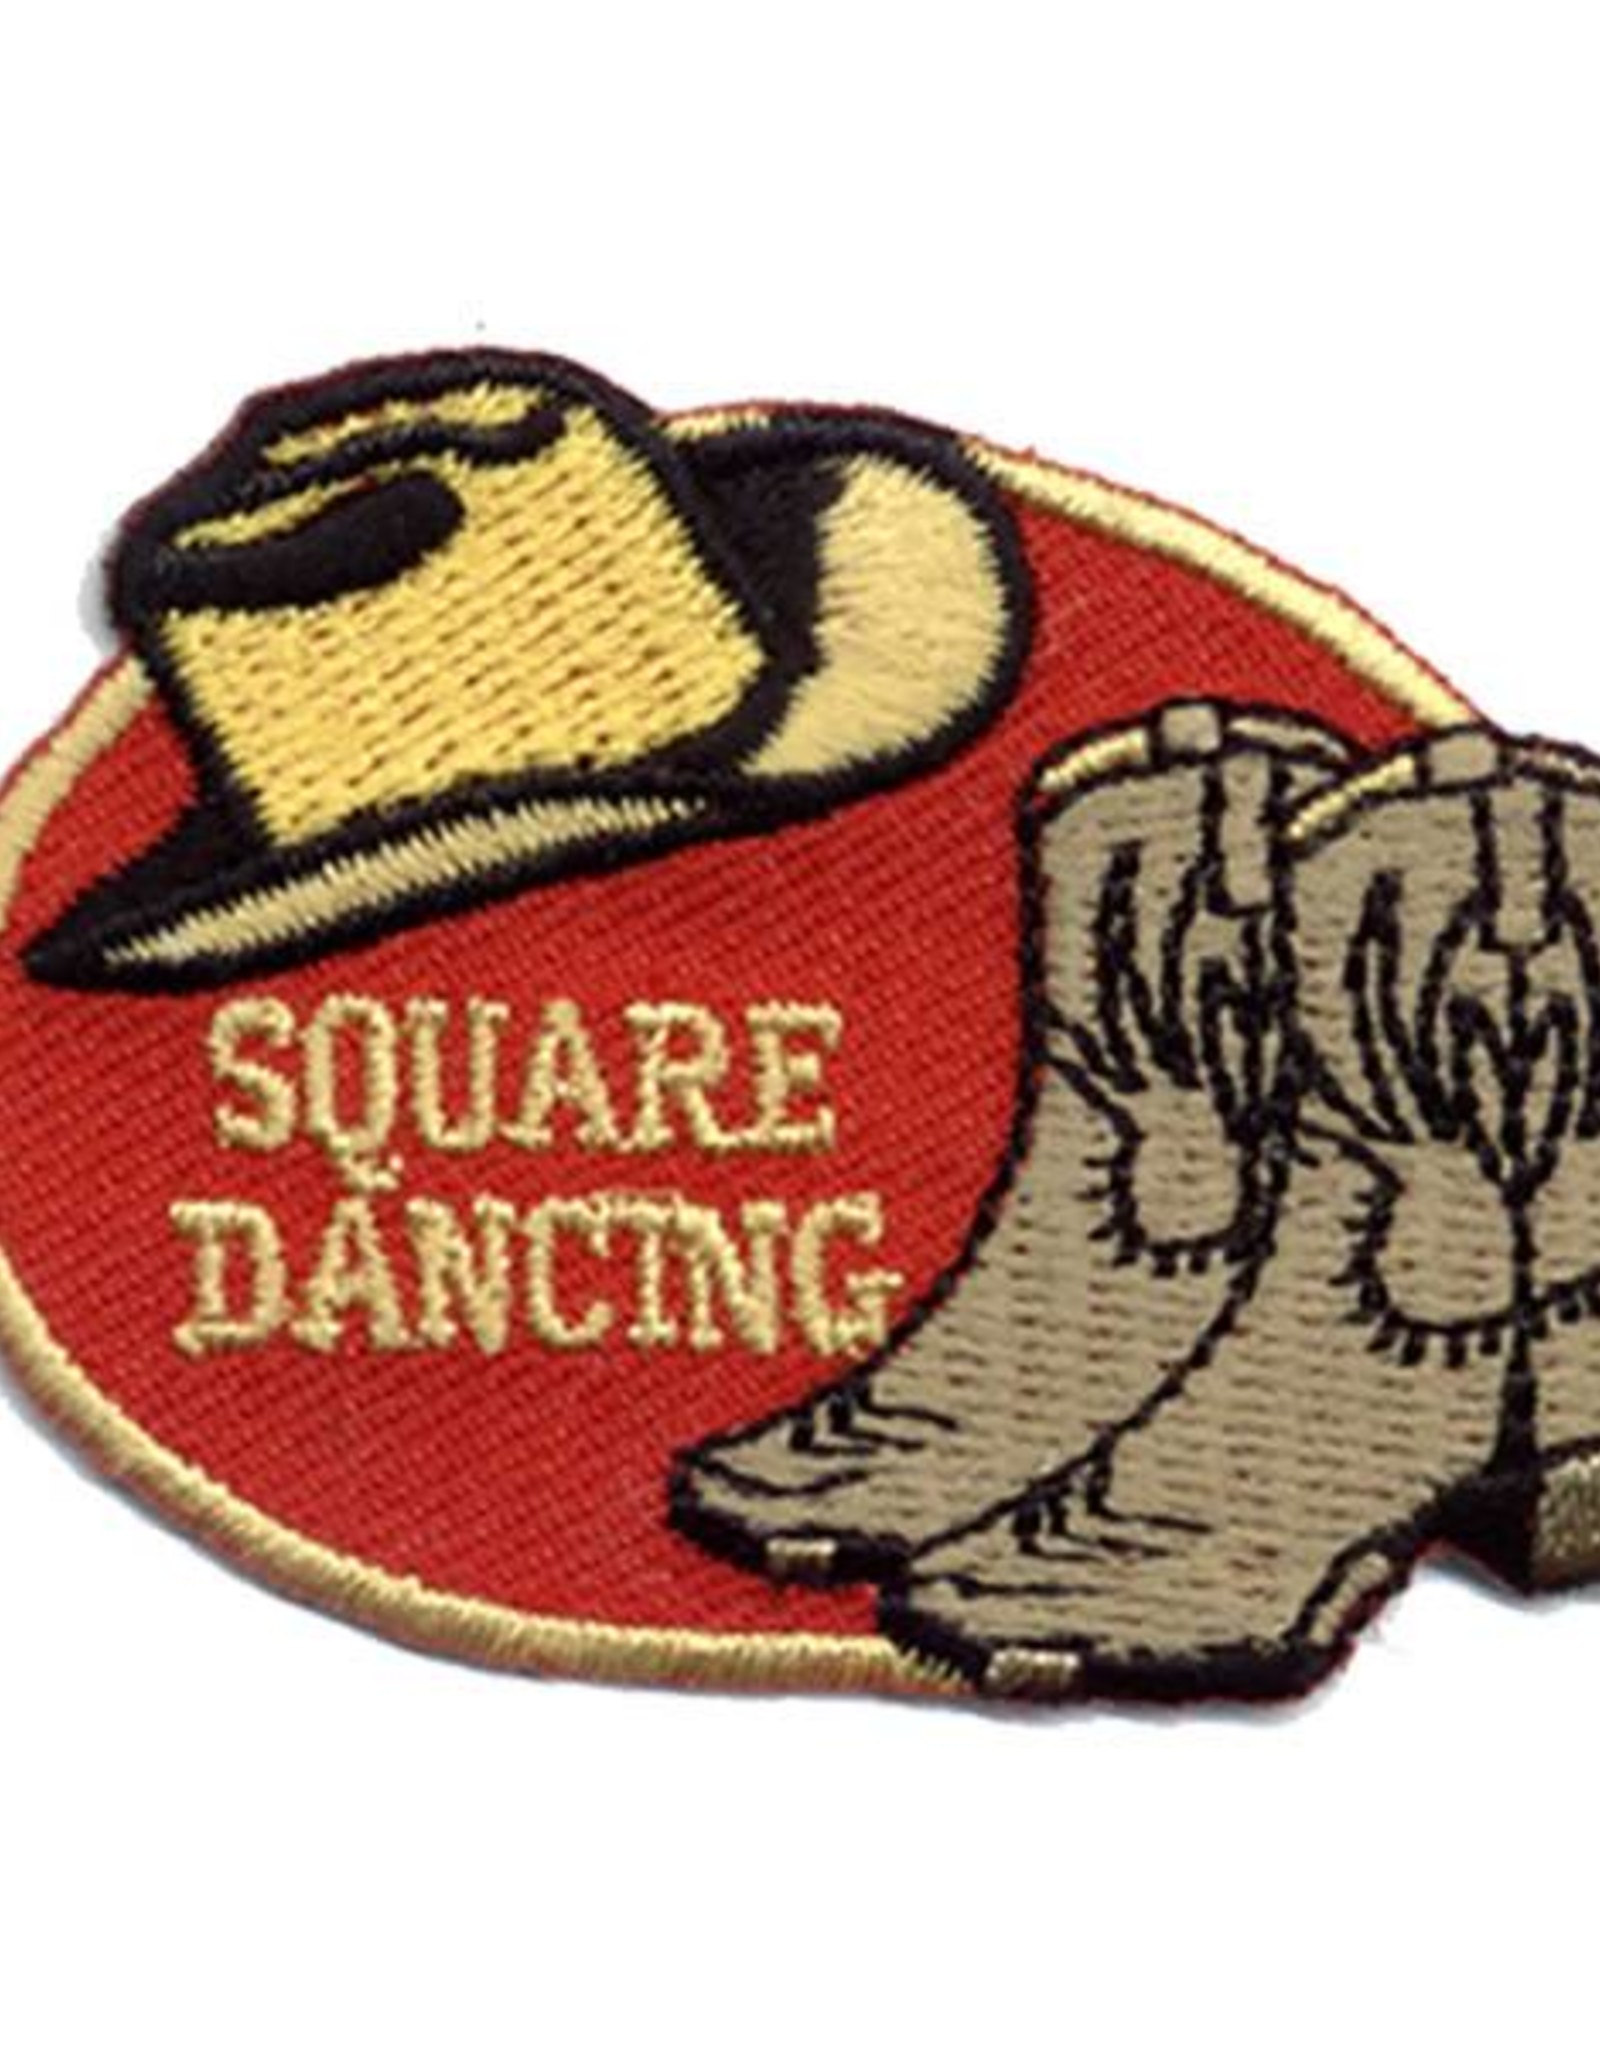 Advantage Emblem & Screen Prnt Square Dancing Fun Patch